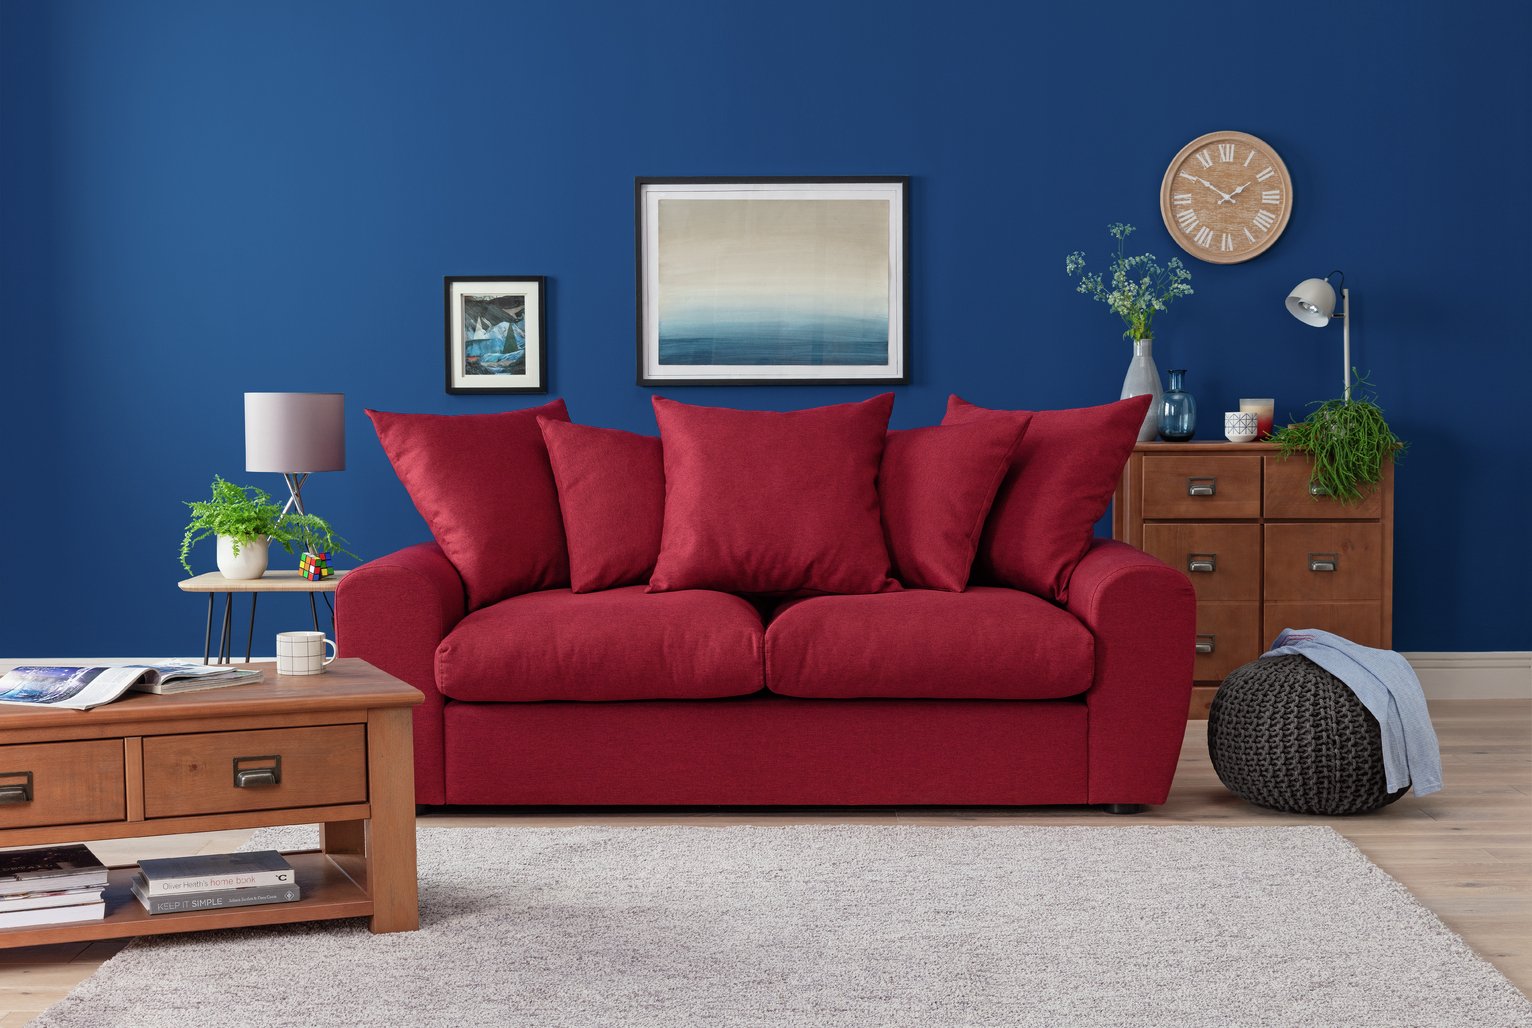 Argos Home Billow 3 Seater Fabric Sofa Review